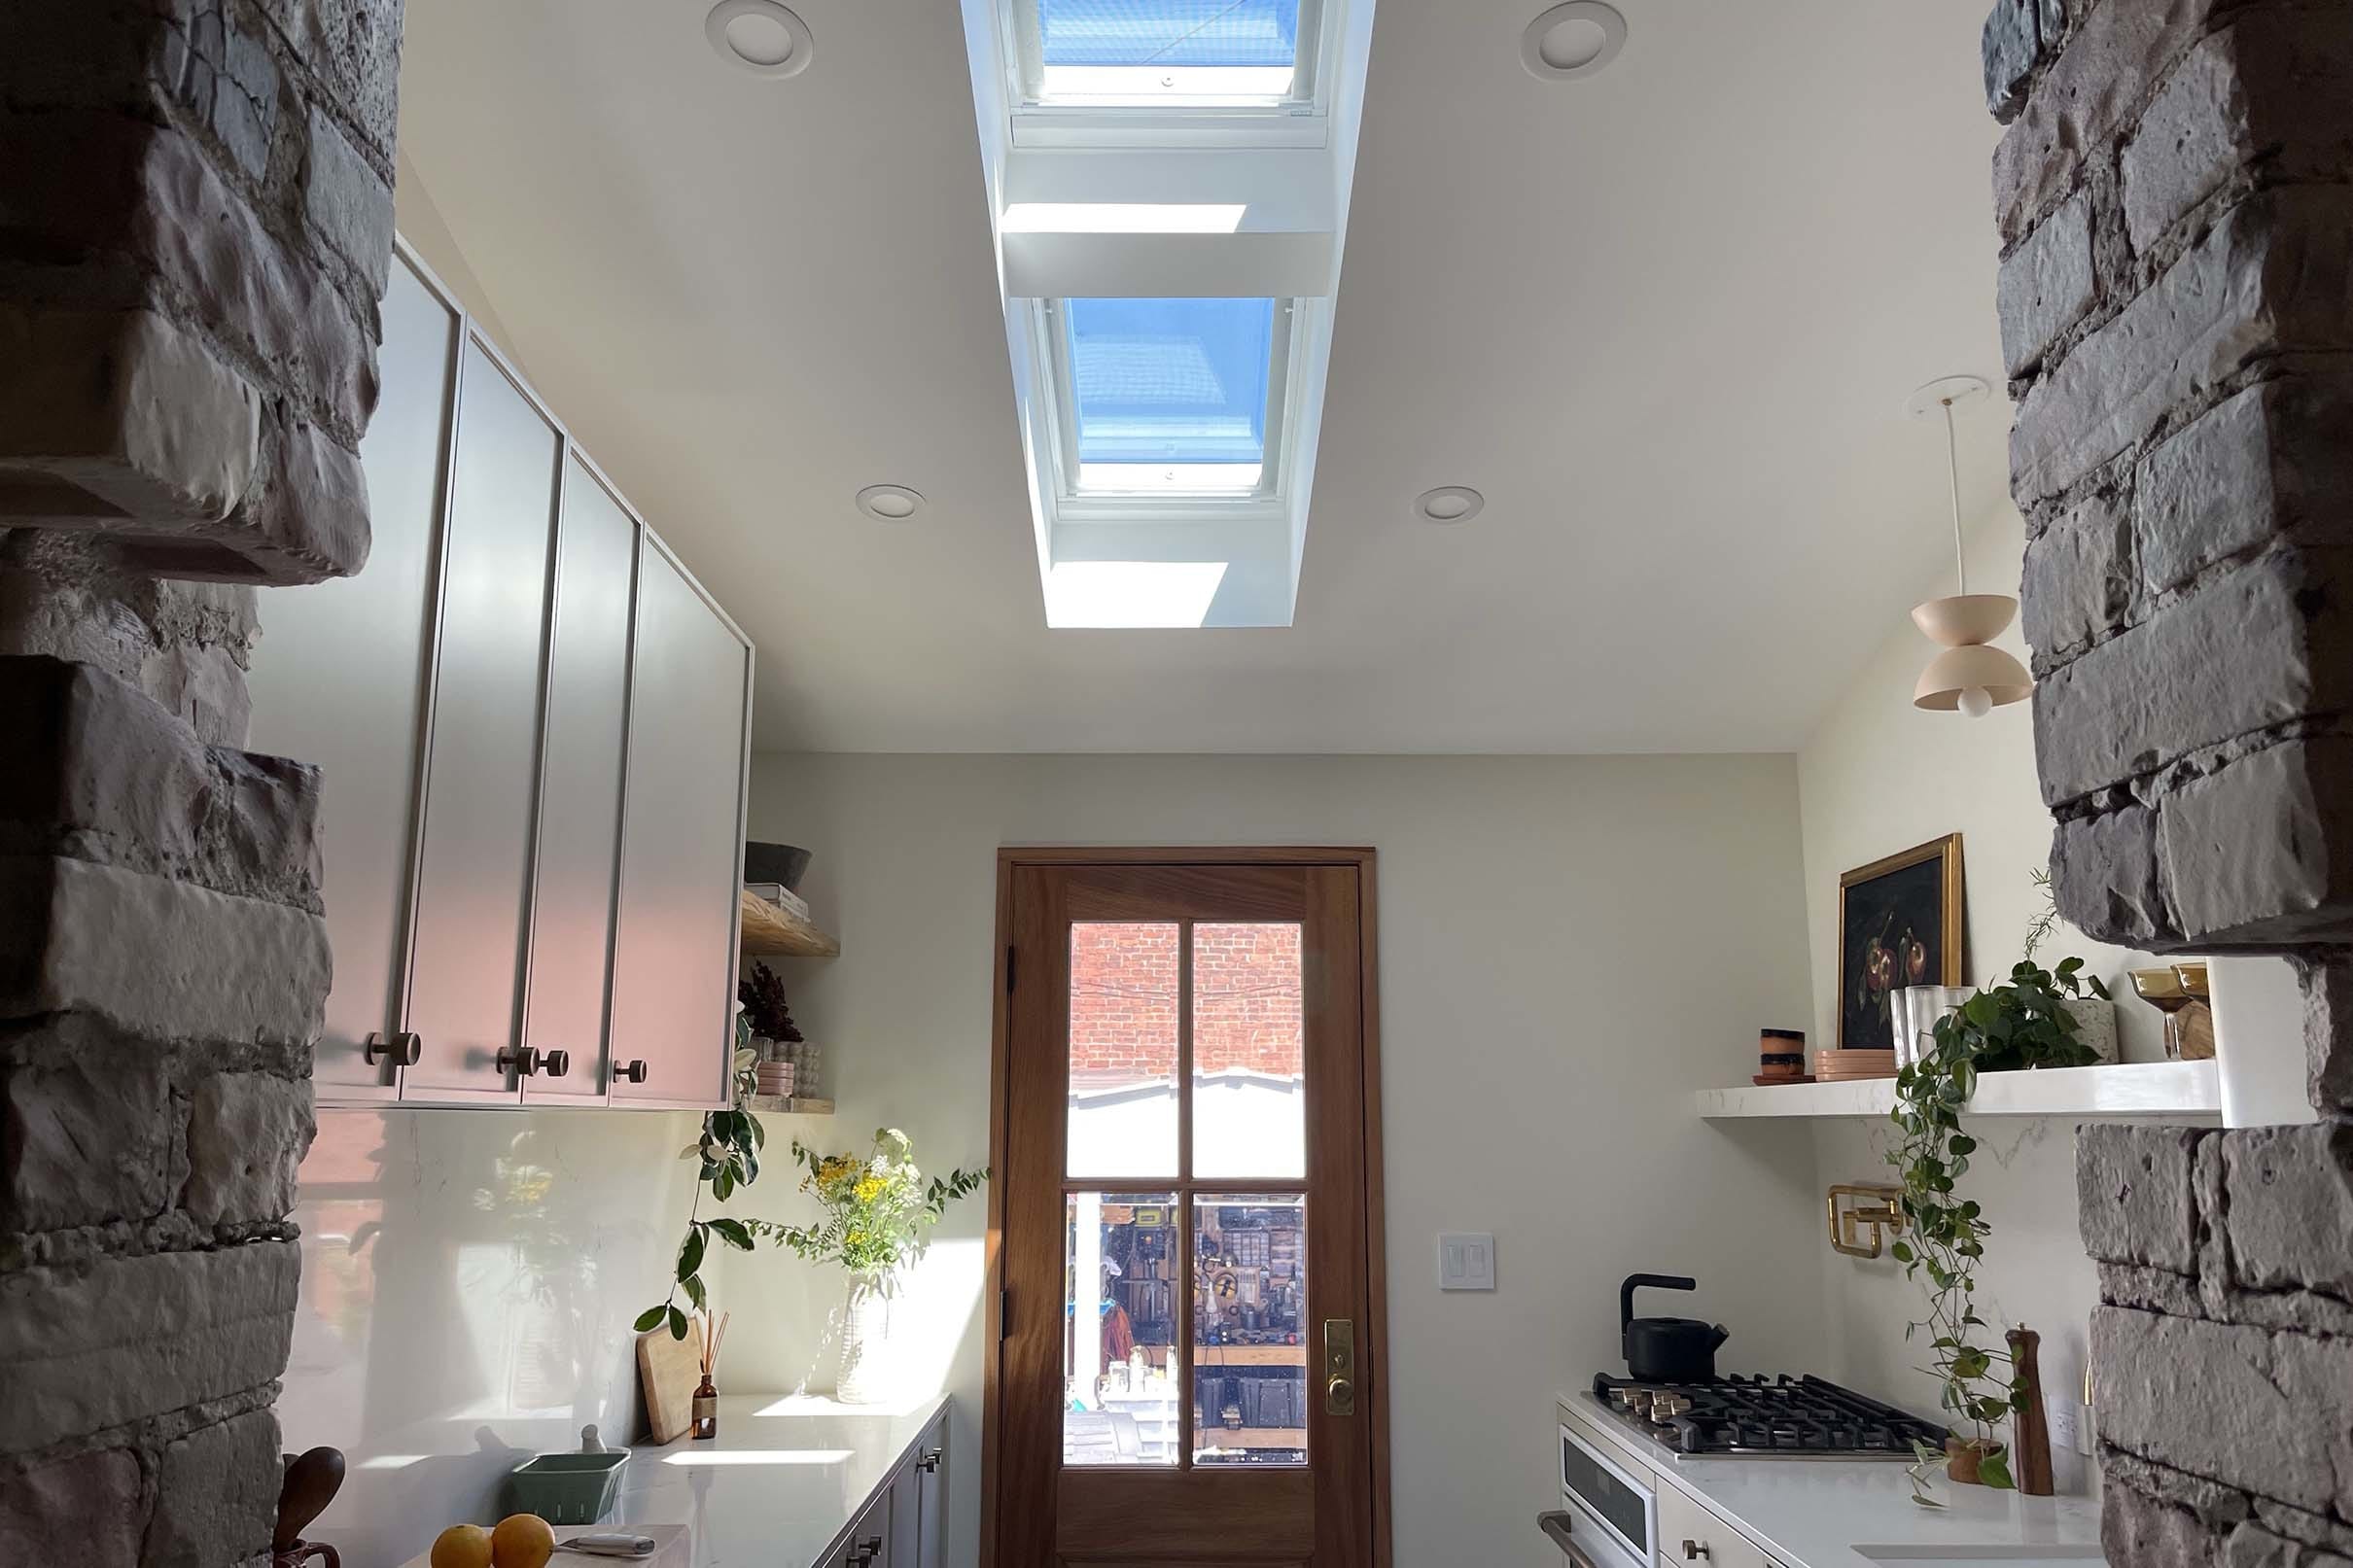 Galley kitchen skylights from doorway TMB